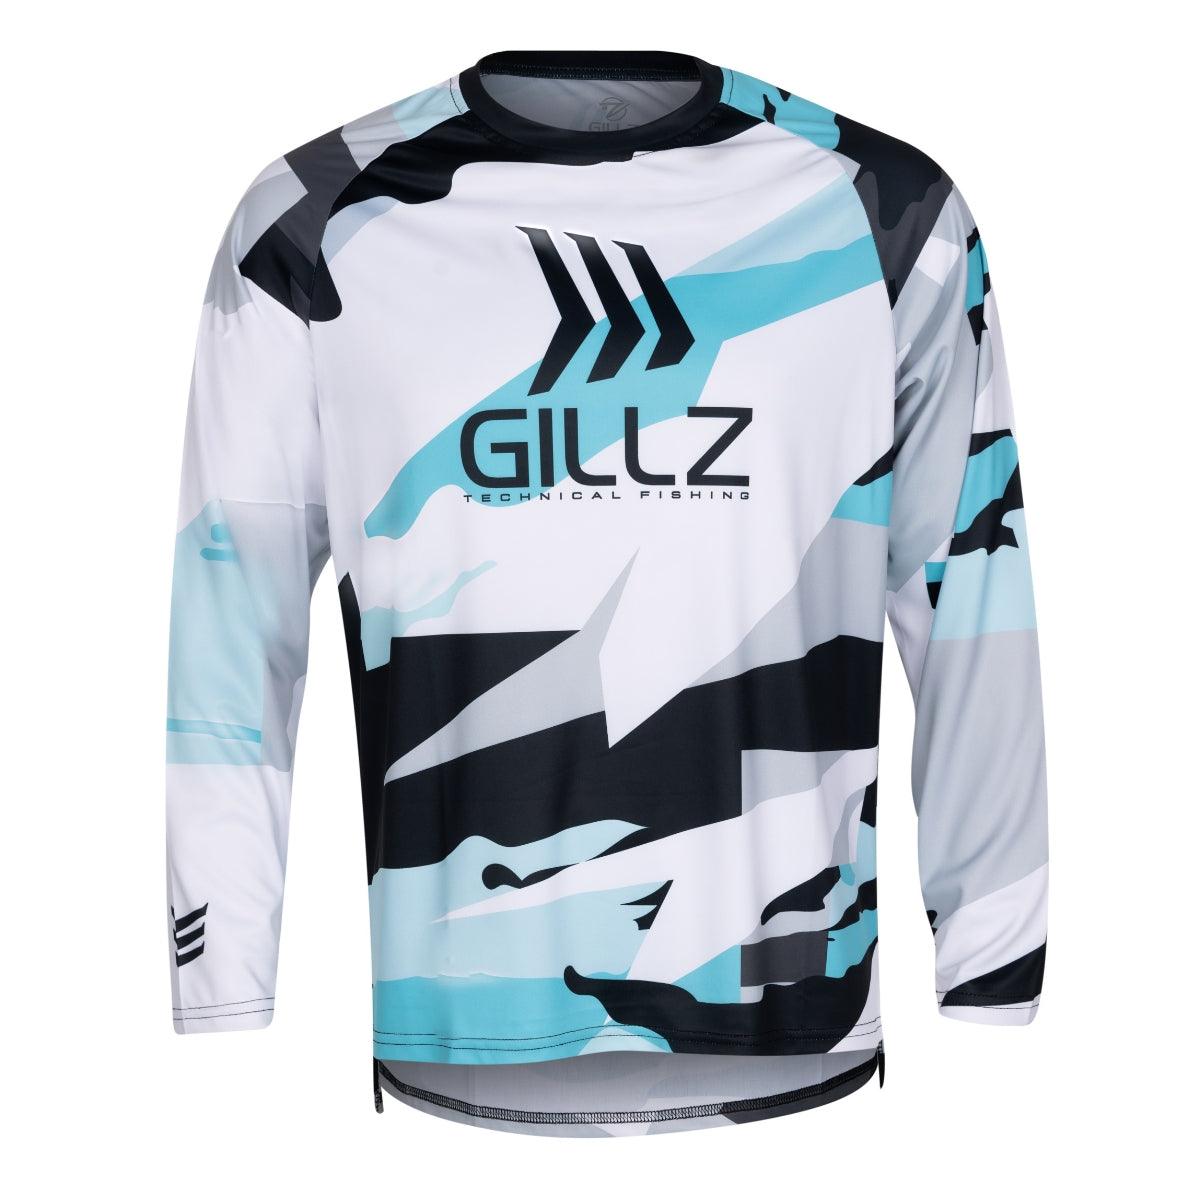 GILLZ Fishing Shirt Long Sleeve Jersey Men Tops Gear Protection